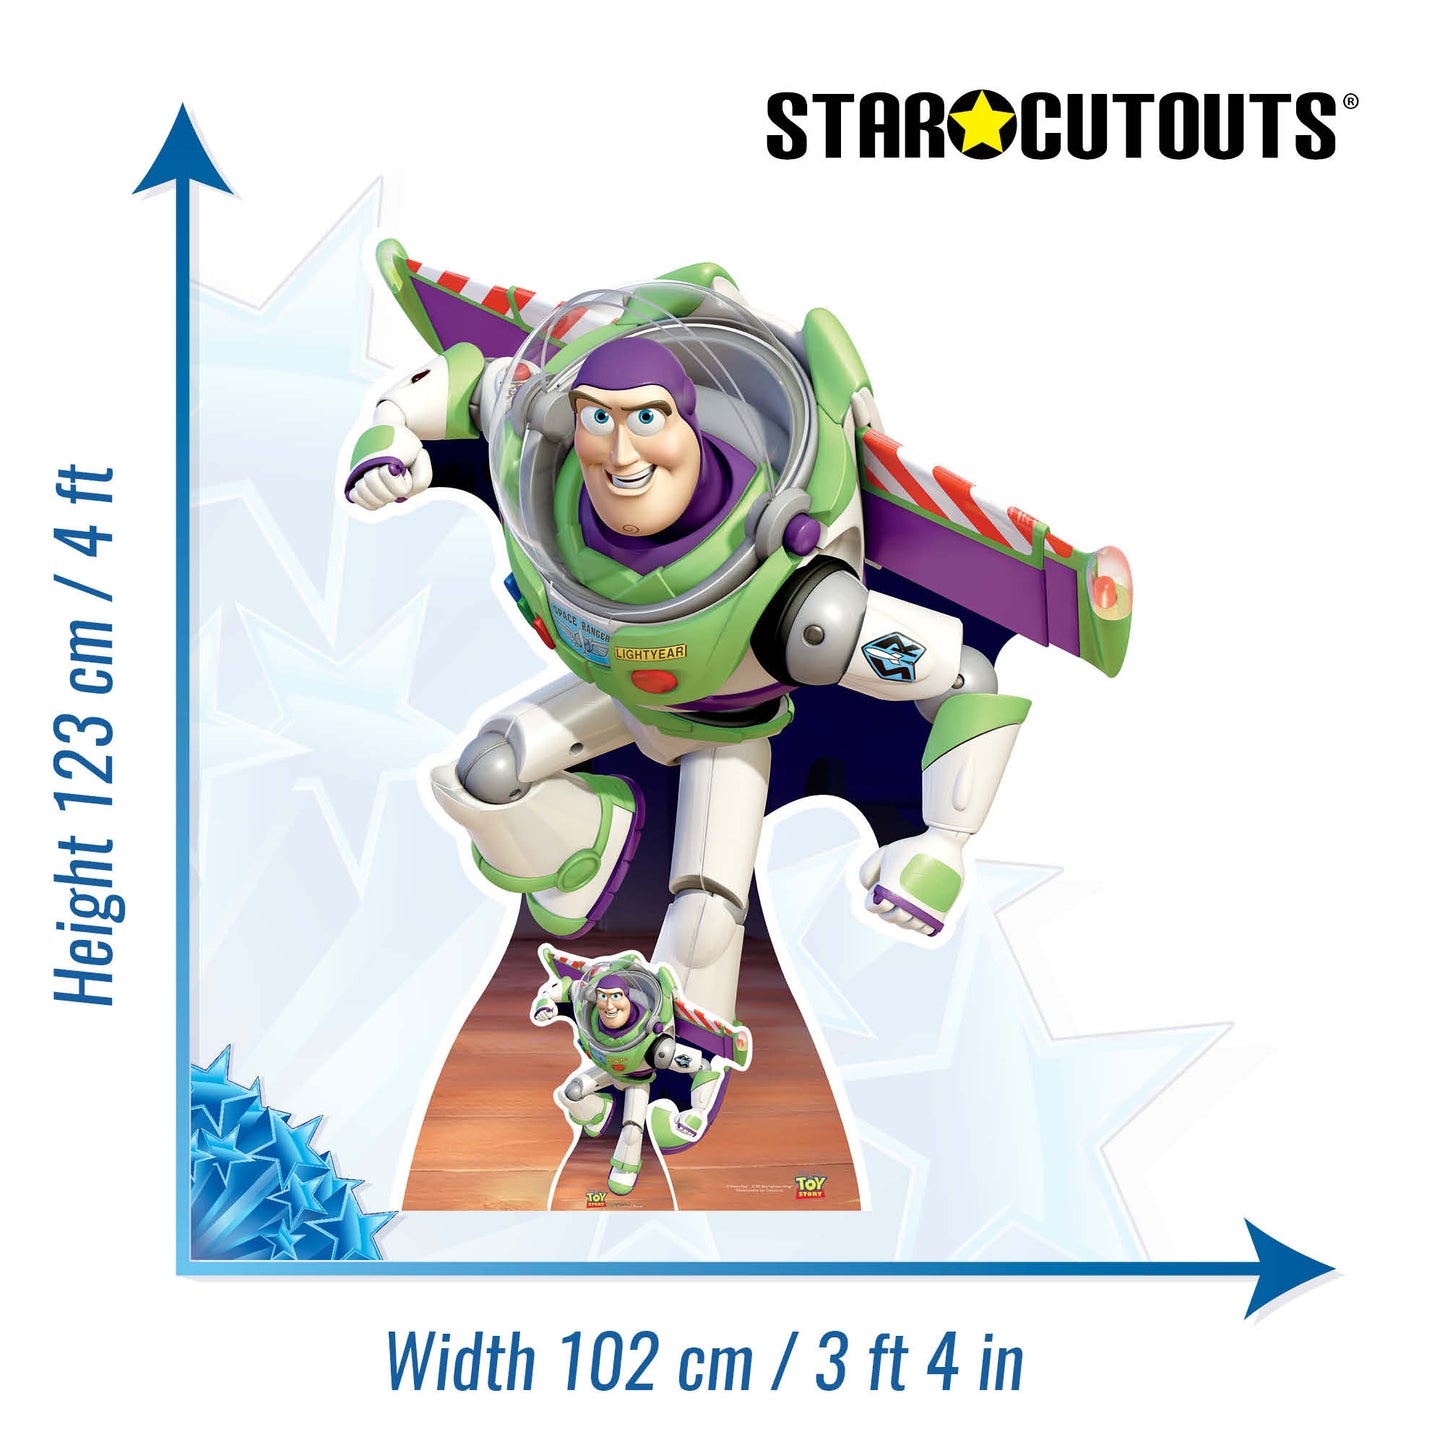 SC600 Buzz Lightyear - Infinity & Beyond Cardboard Cut Out Height 123cm